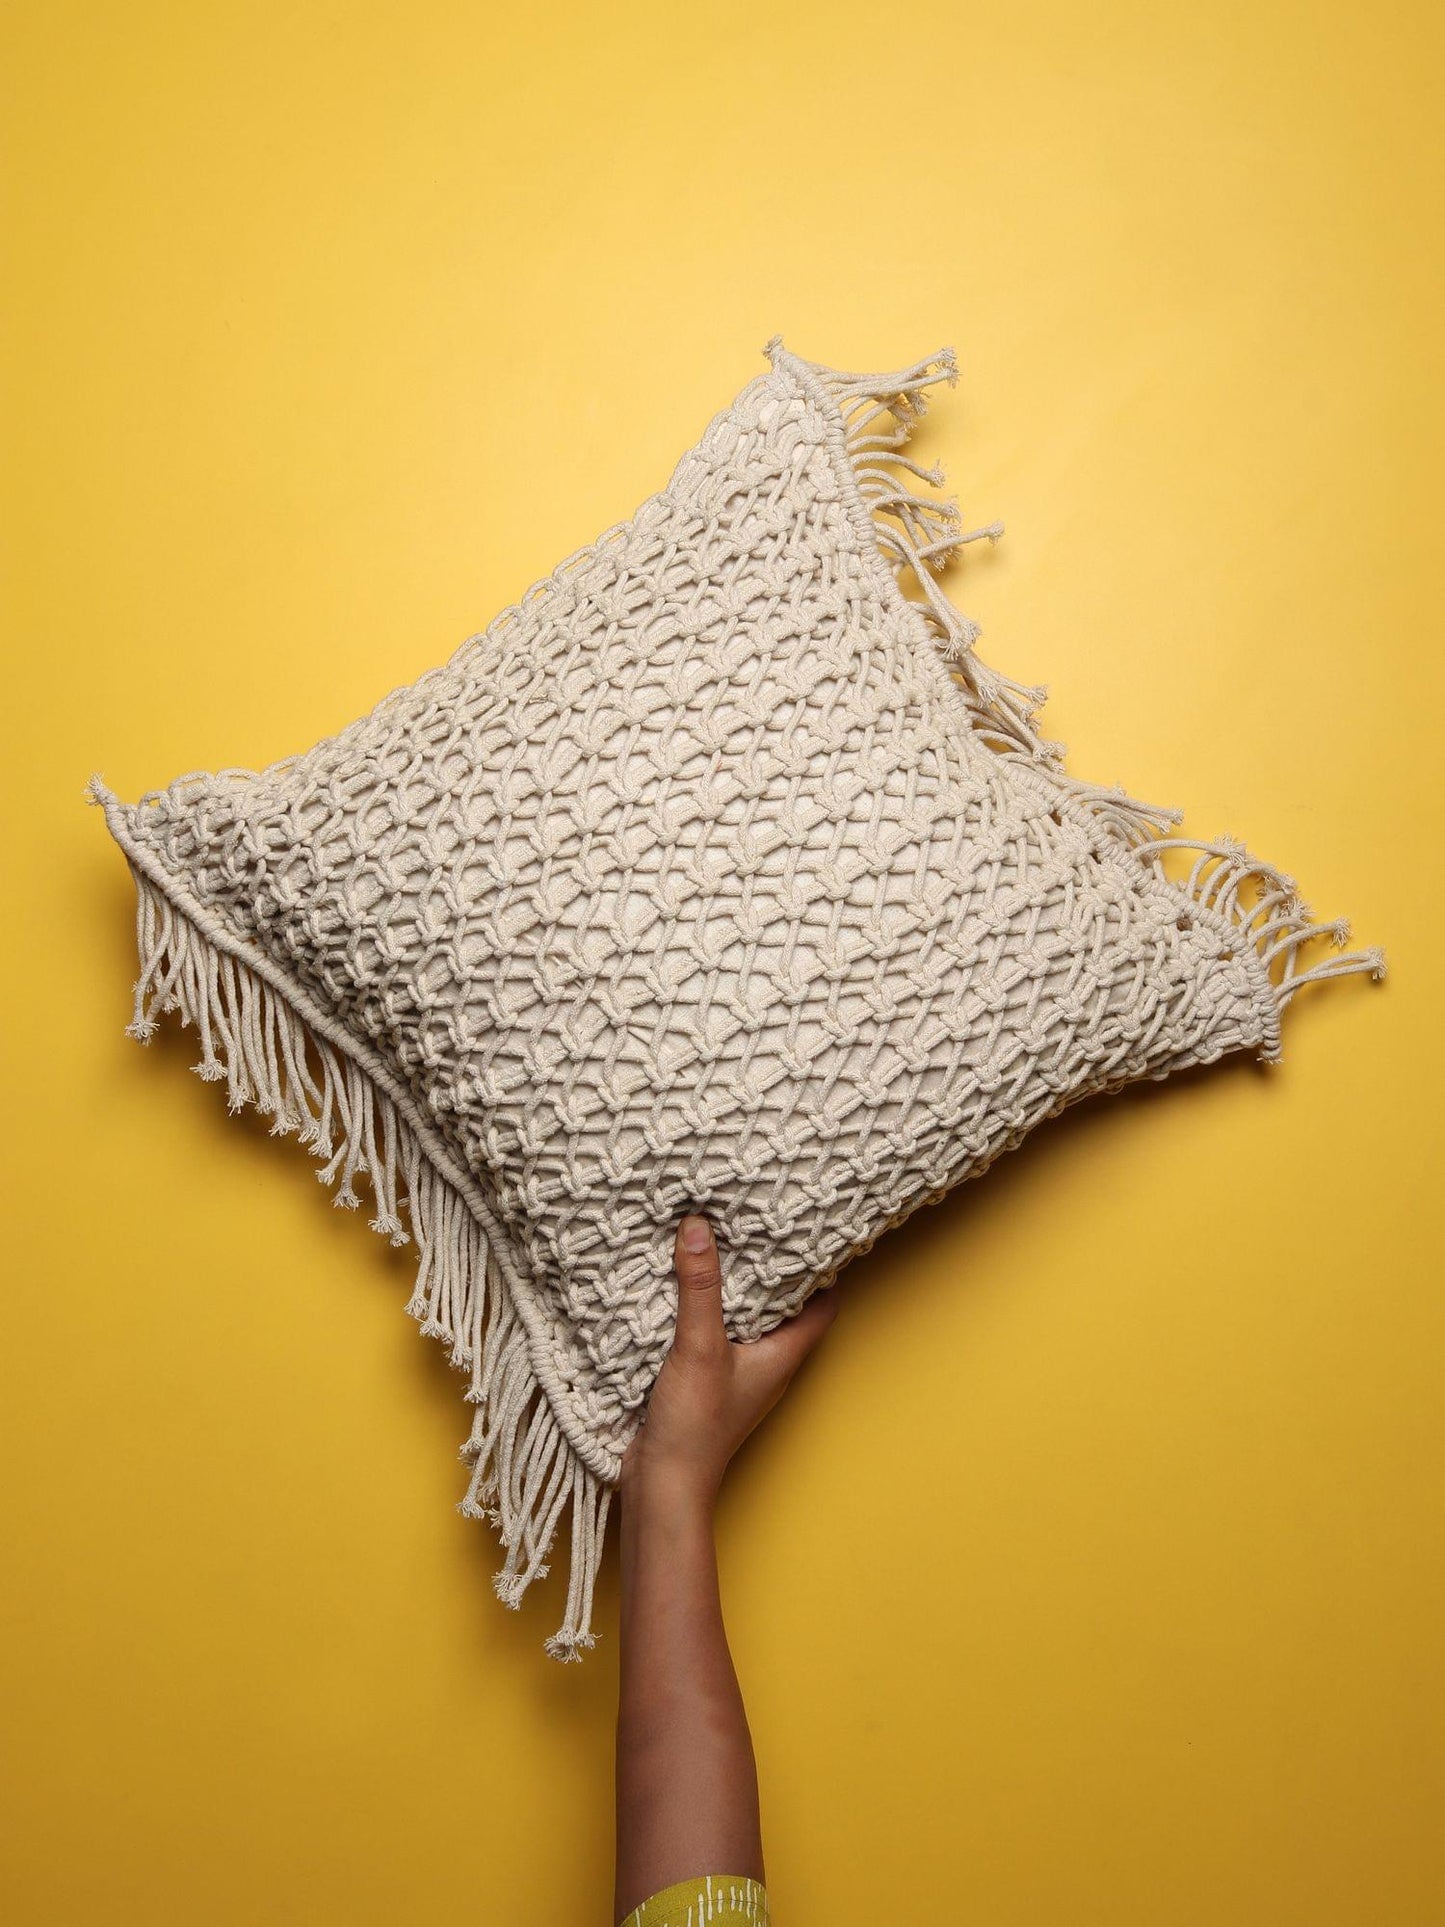 Handloom Cotton Cushion Cover